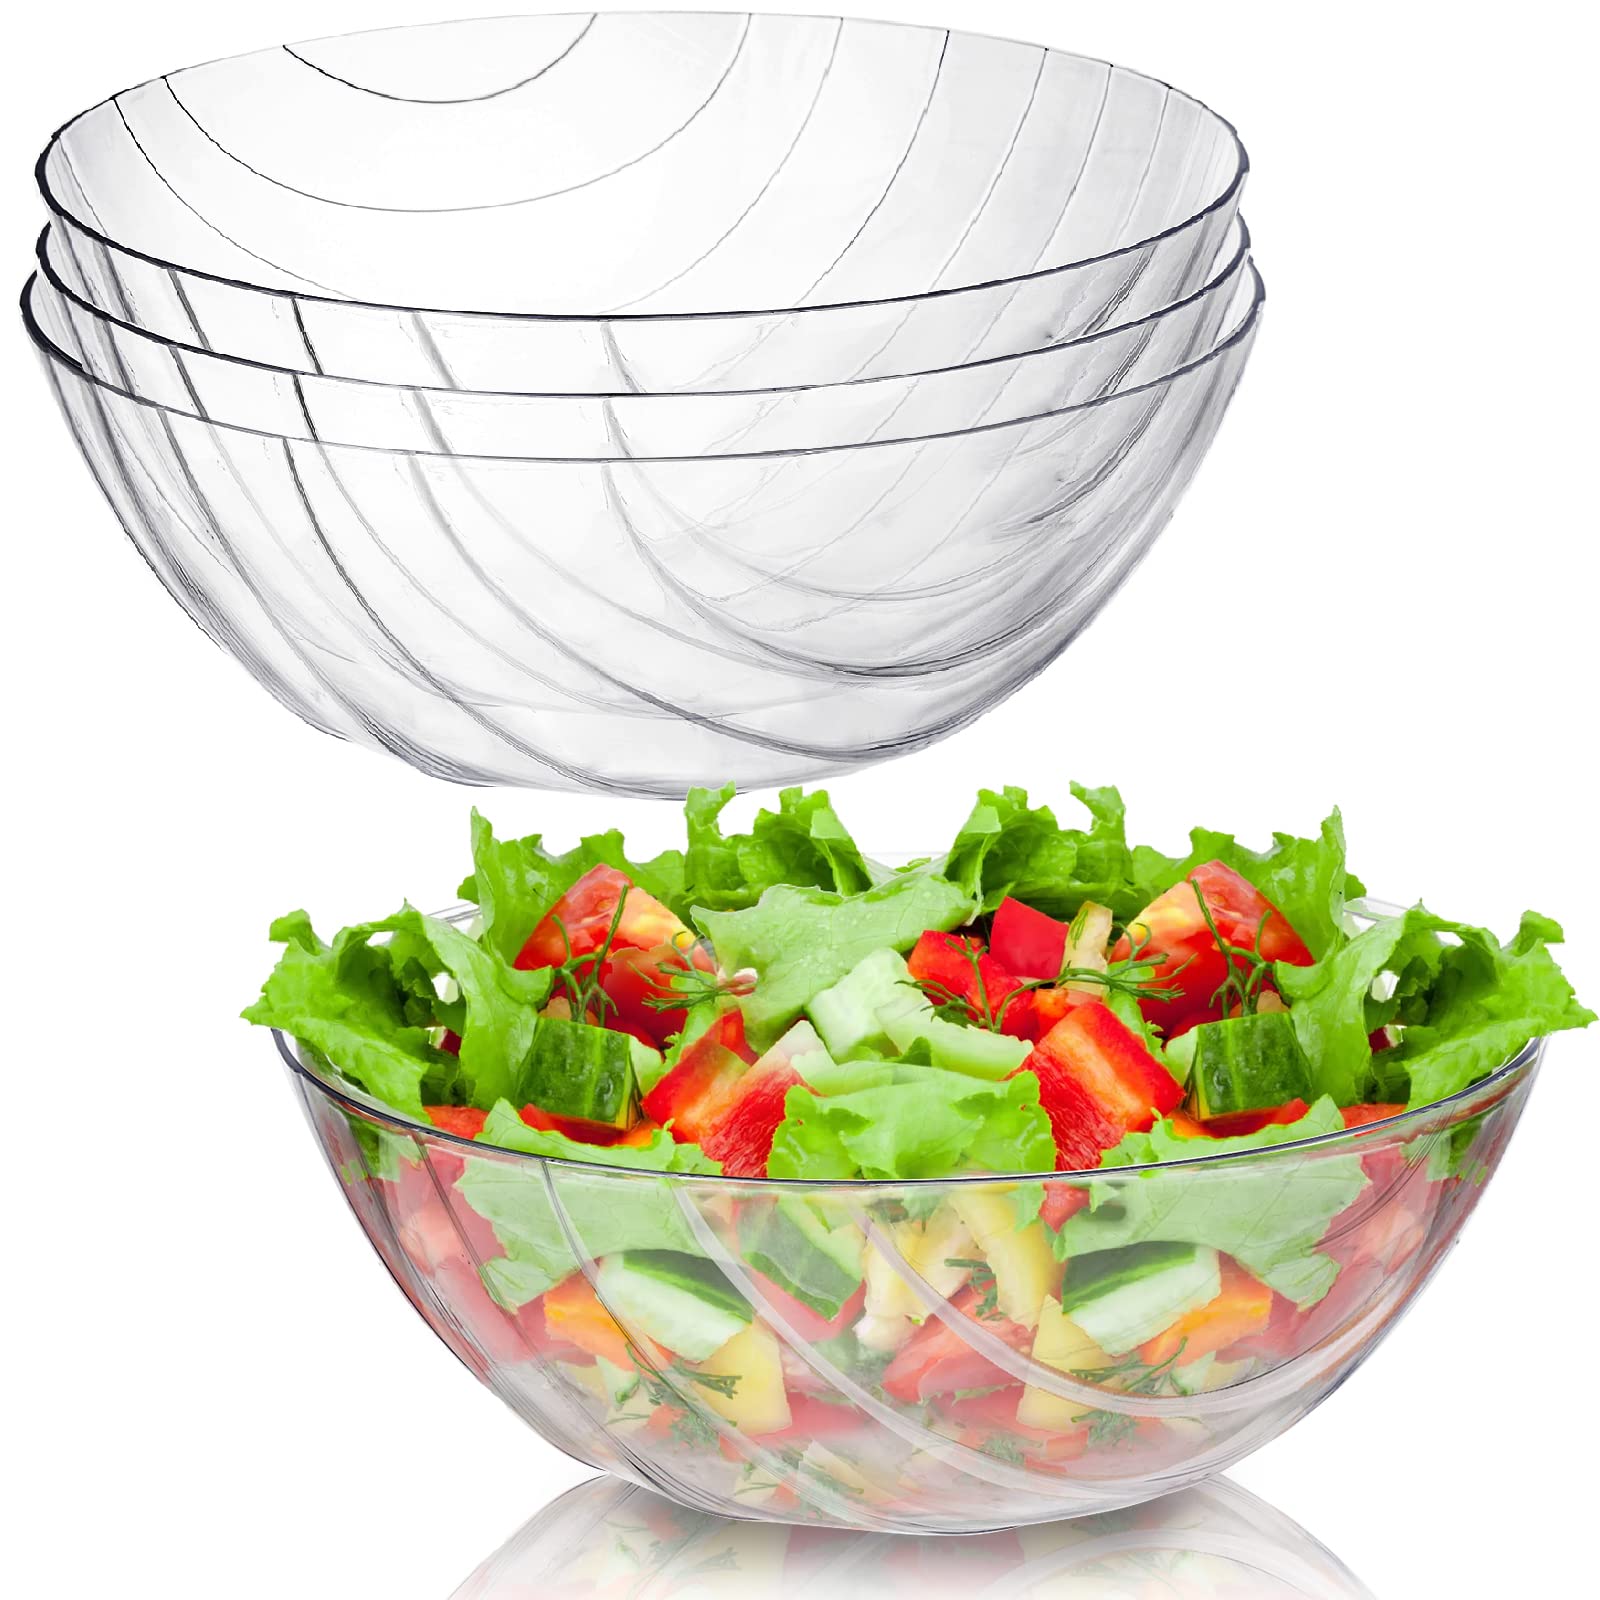 Lyellfe 4 Pack Large Salad Bowls, 135 OZ Plastic Salad Bowls, Mixing and Serving Bowls, Chip Bowls for Party, Round 10 Inch Serving Bowls for Cereal, Salad, Soup and Popcorn